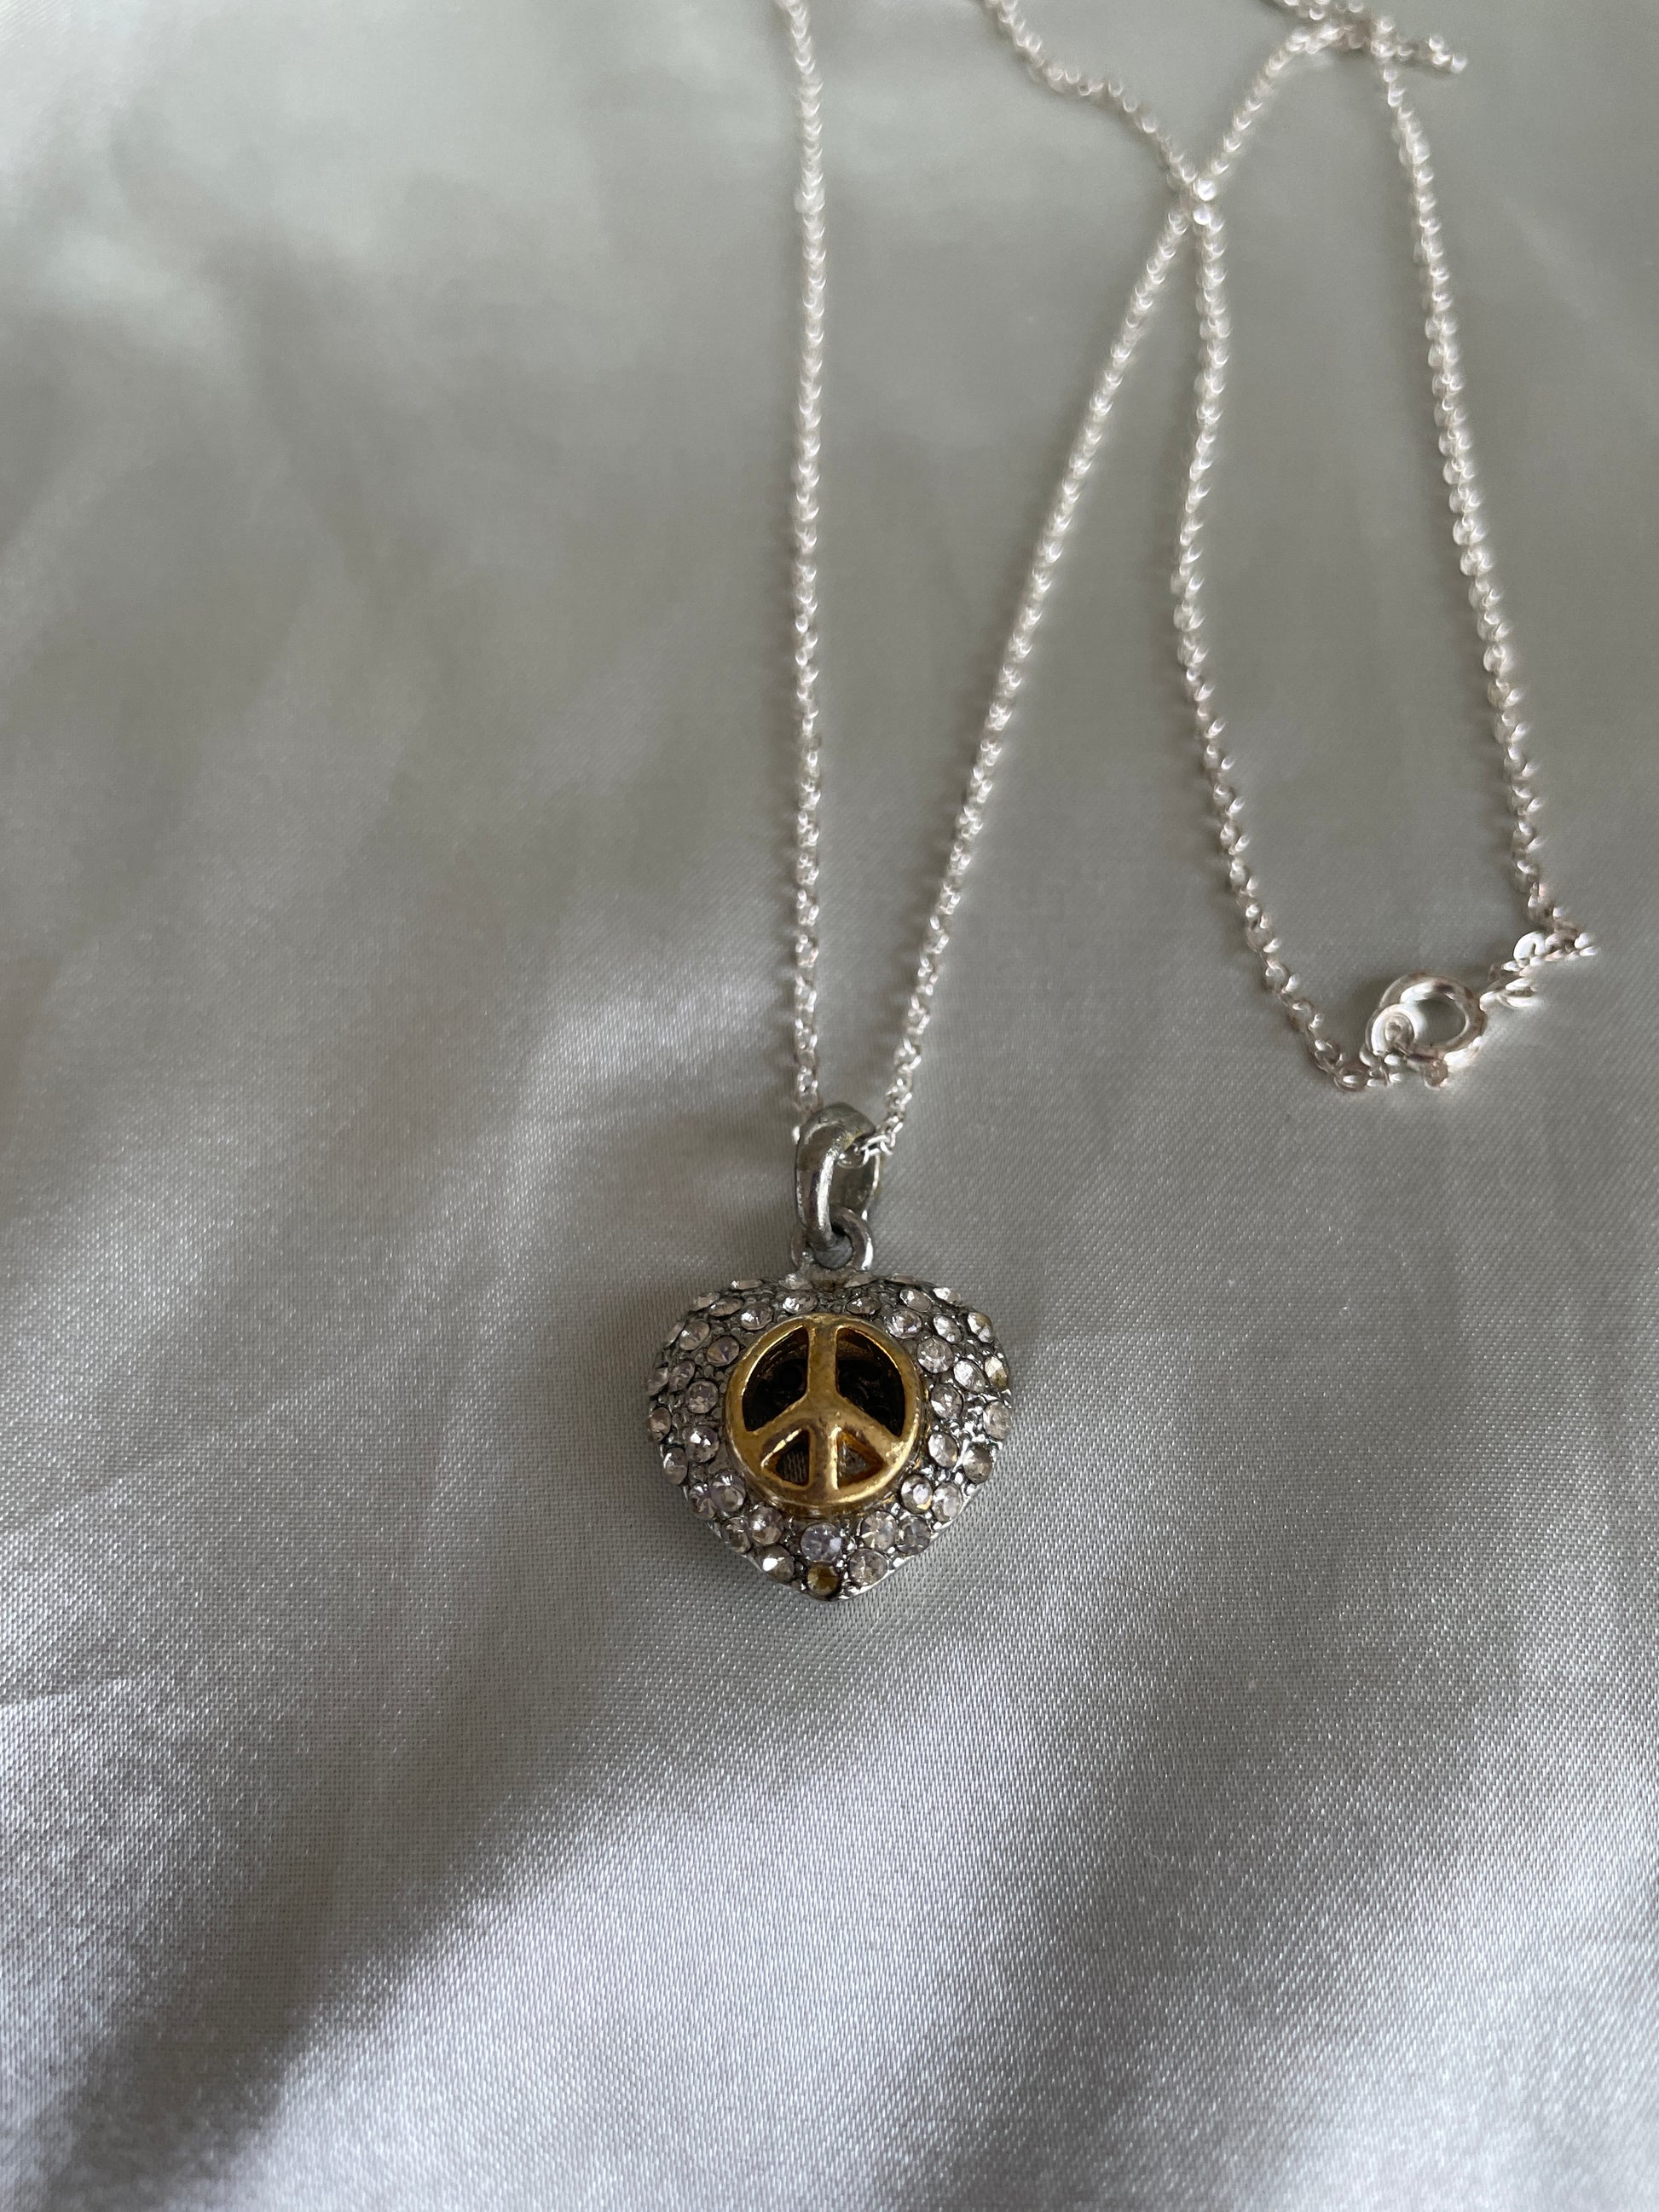  Delicate Silver Chain 2000s Heart Peace Sign Pendant Necklace